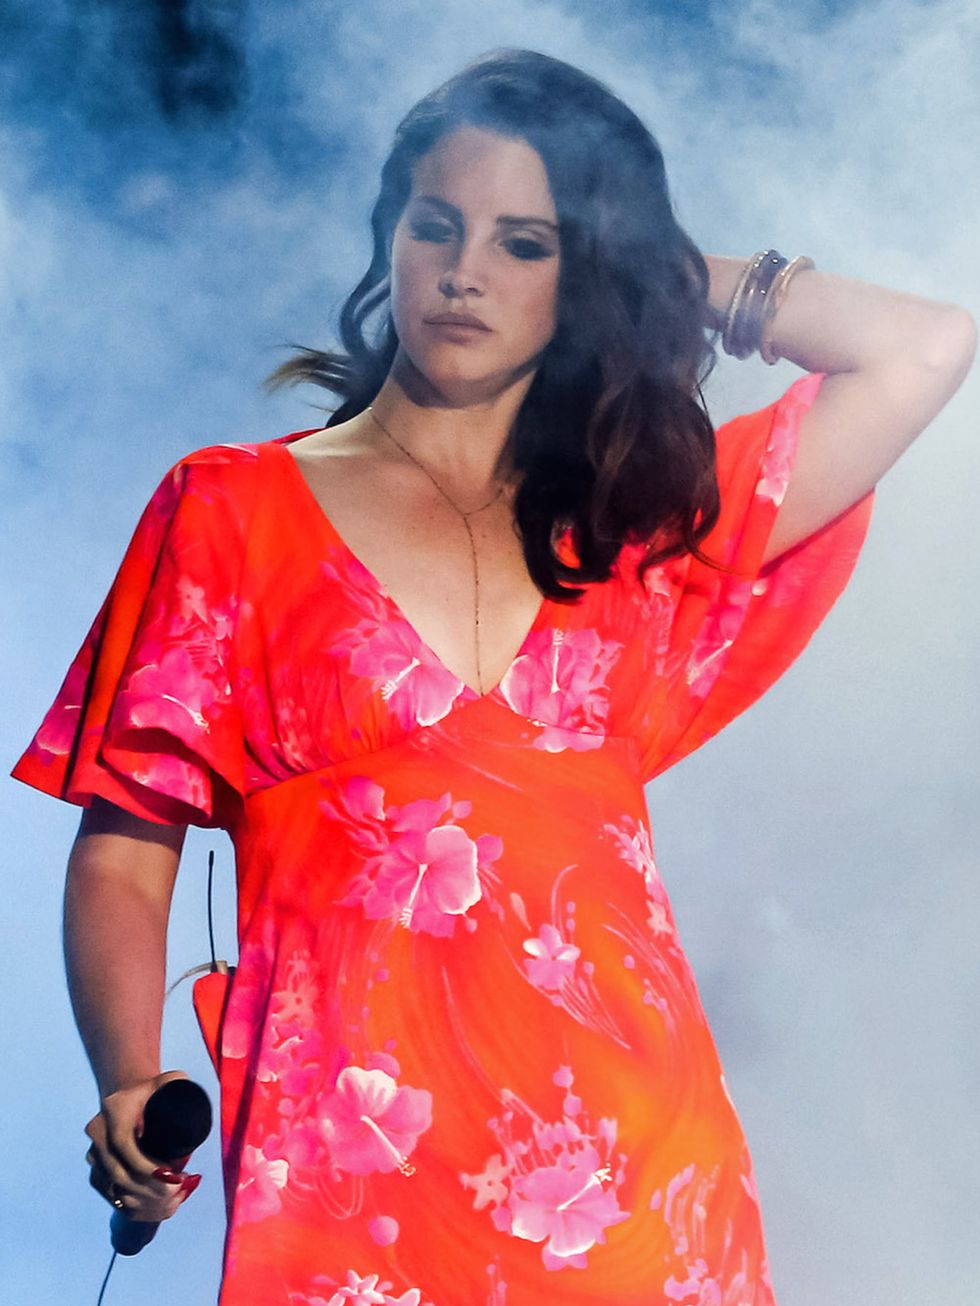 Lana performing at Coachella in 2014